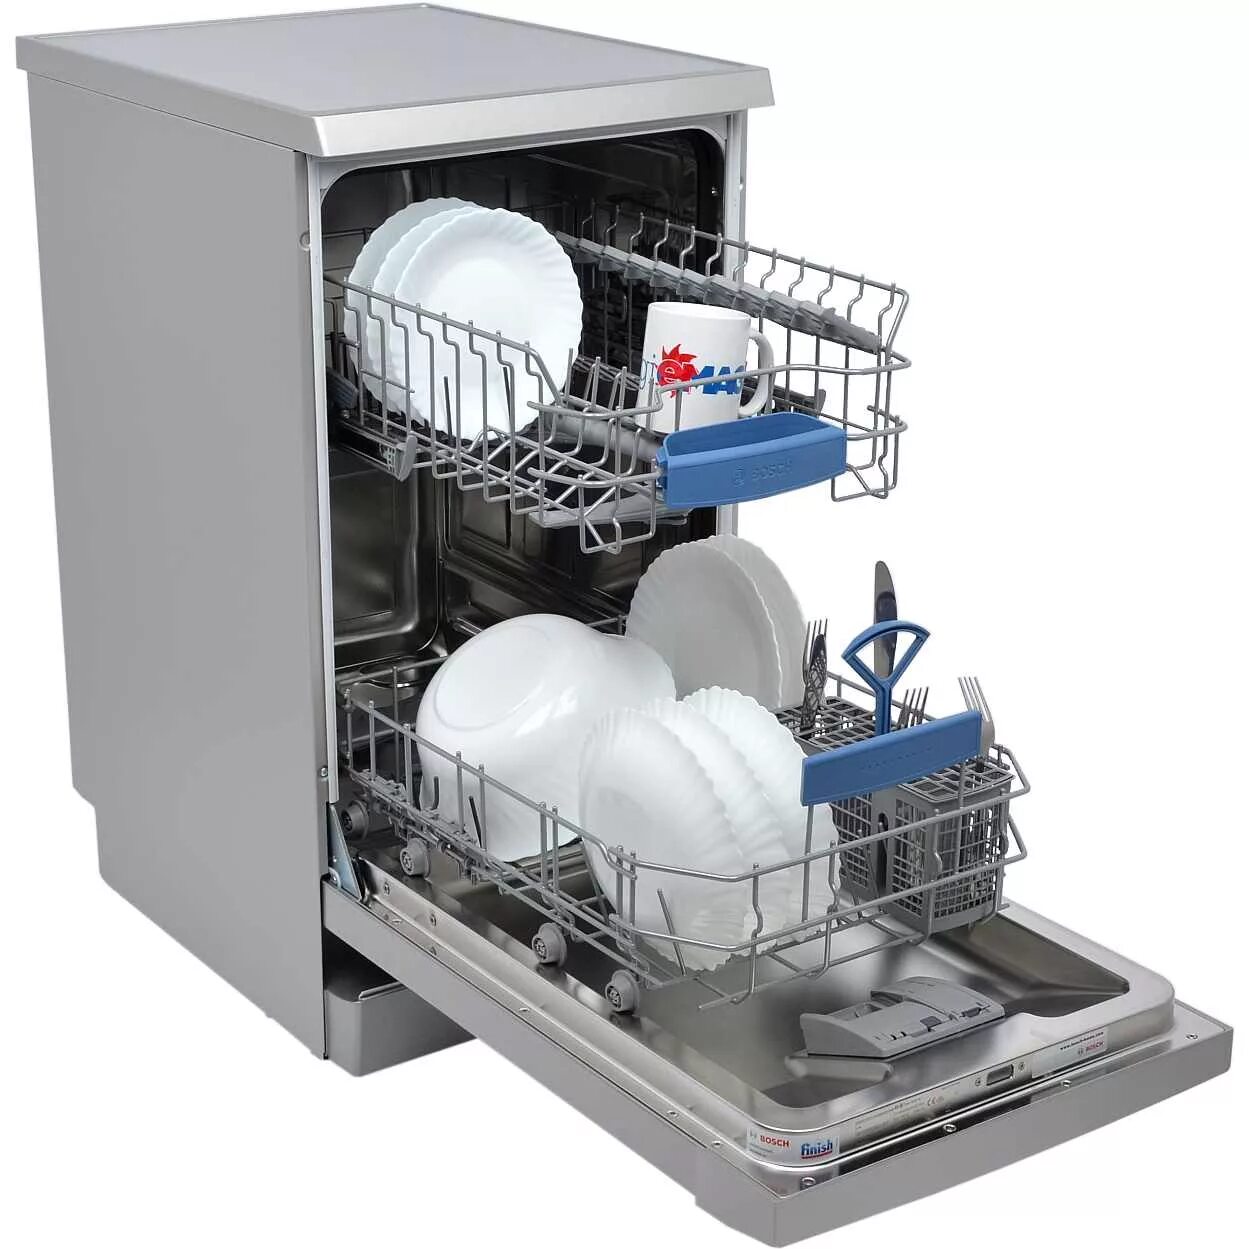 Посудомоечная машина Bosch sps2ikw1br. Посудомоечная машина Neff s855hmx50r. ПММ бош sps53. Посудомоечная машина Bosch spv6hmx1mr. Куплю посудомоечную машину б у